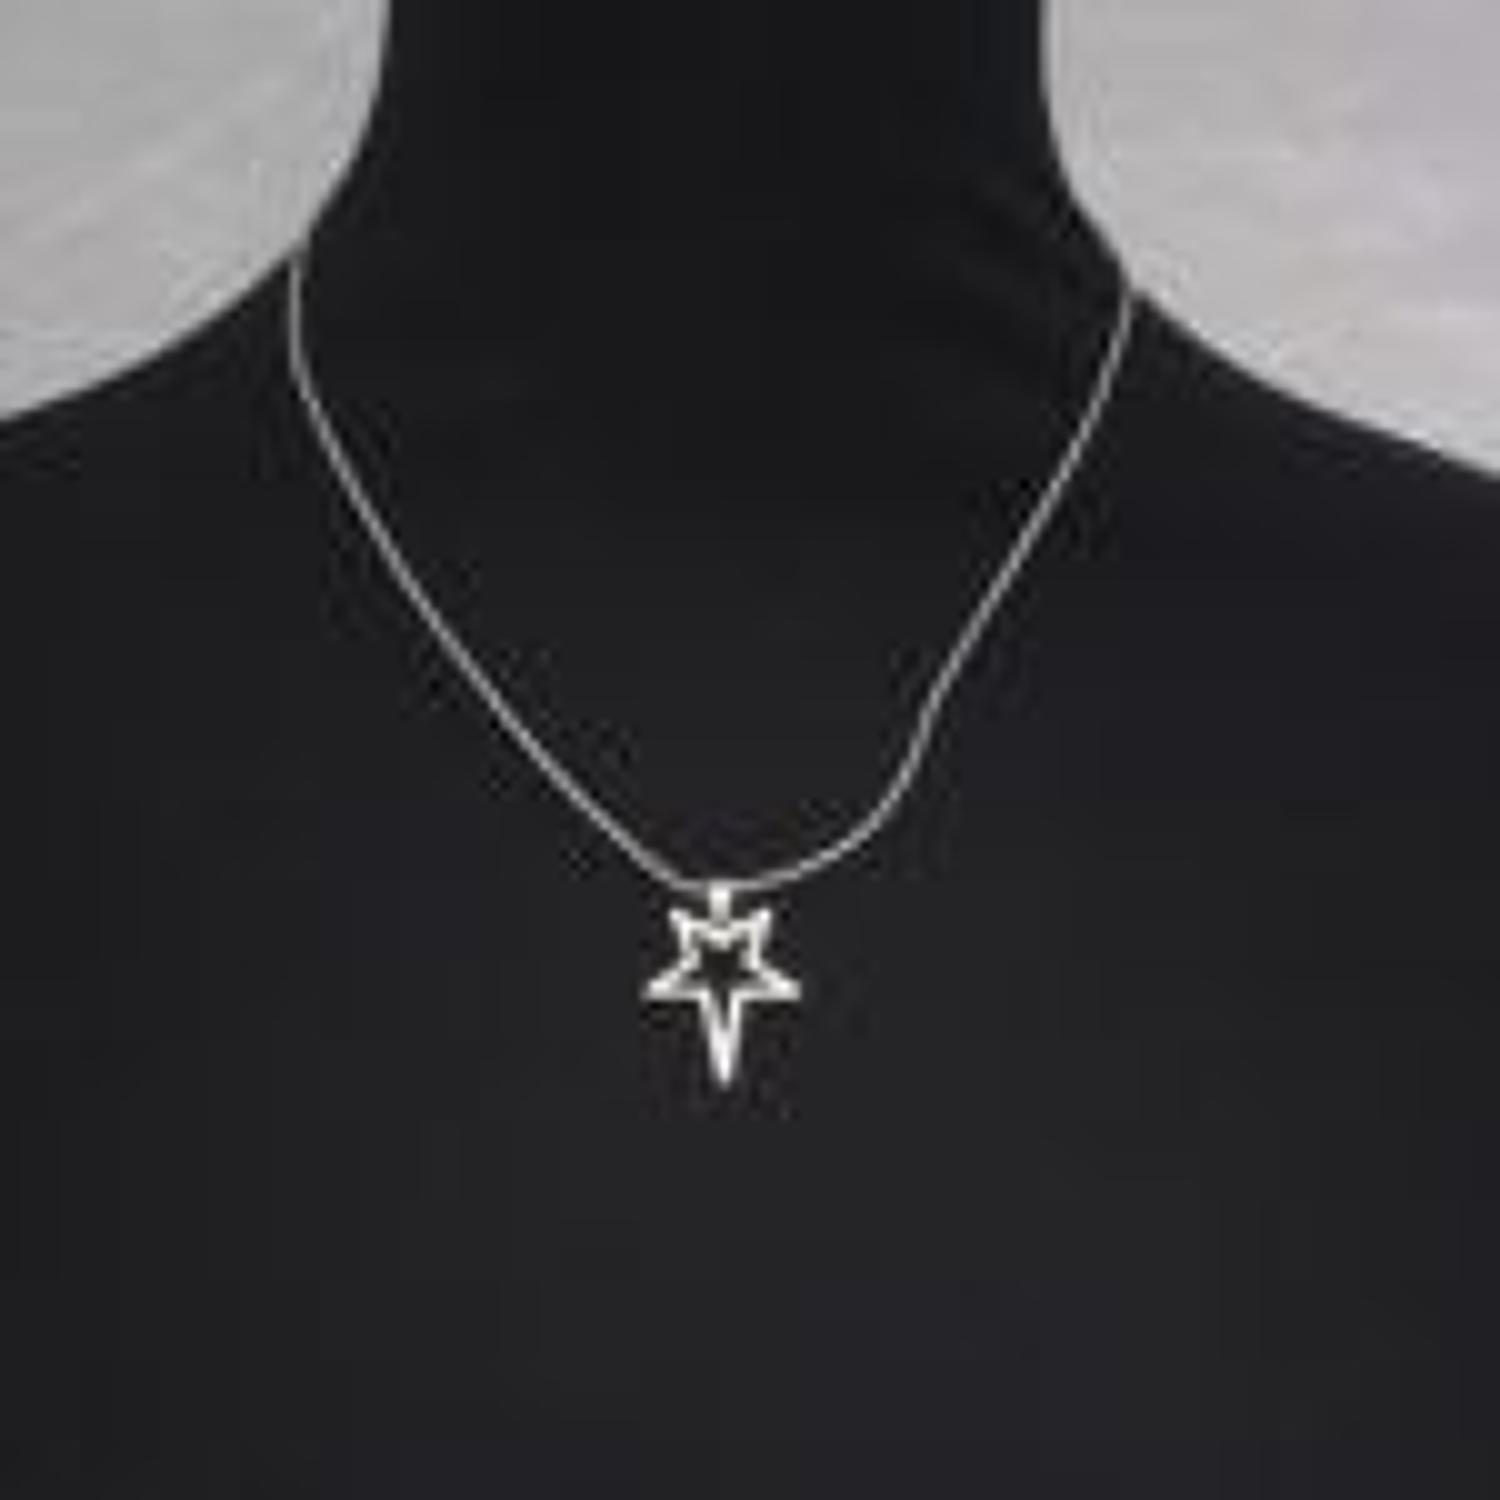 J & L - Silver star short necklace